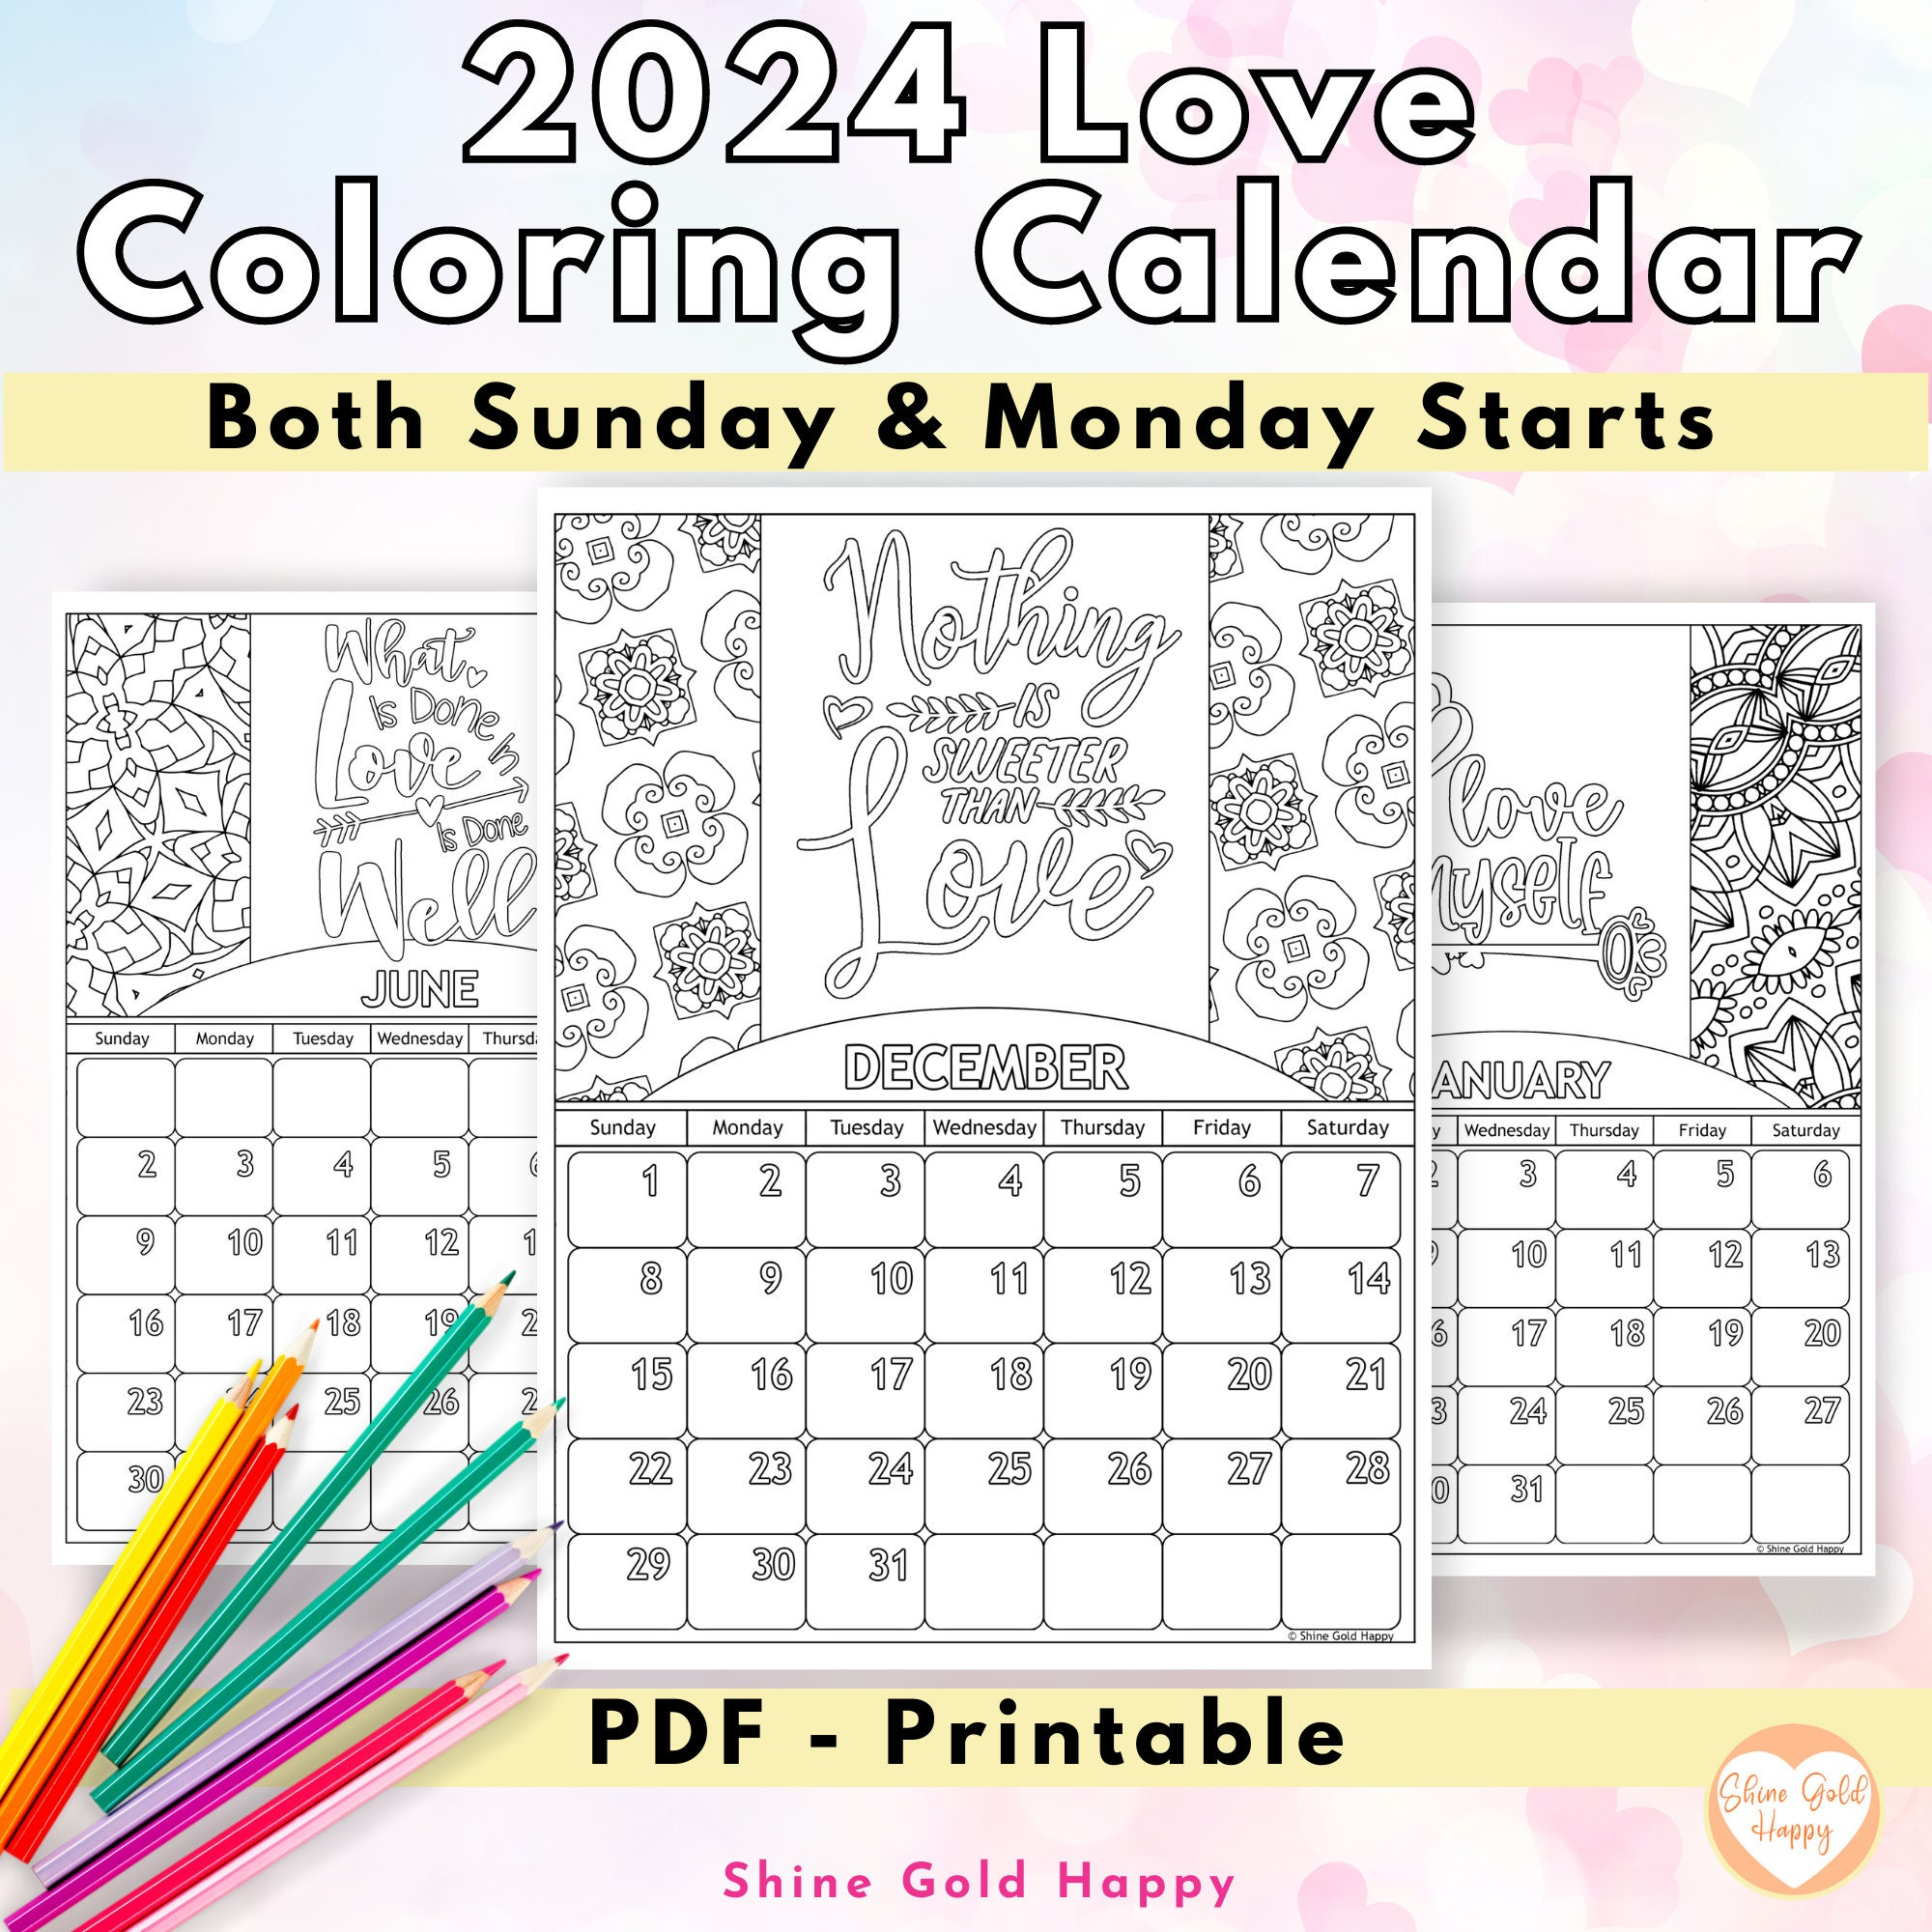 2024 Love Coloring Calendar Printable Calendar 2024 Pdf - Etsy | Printable Coloring Calendar 2024